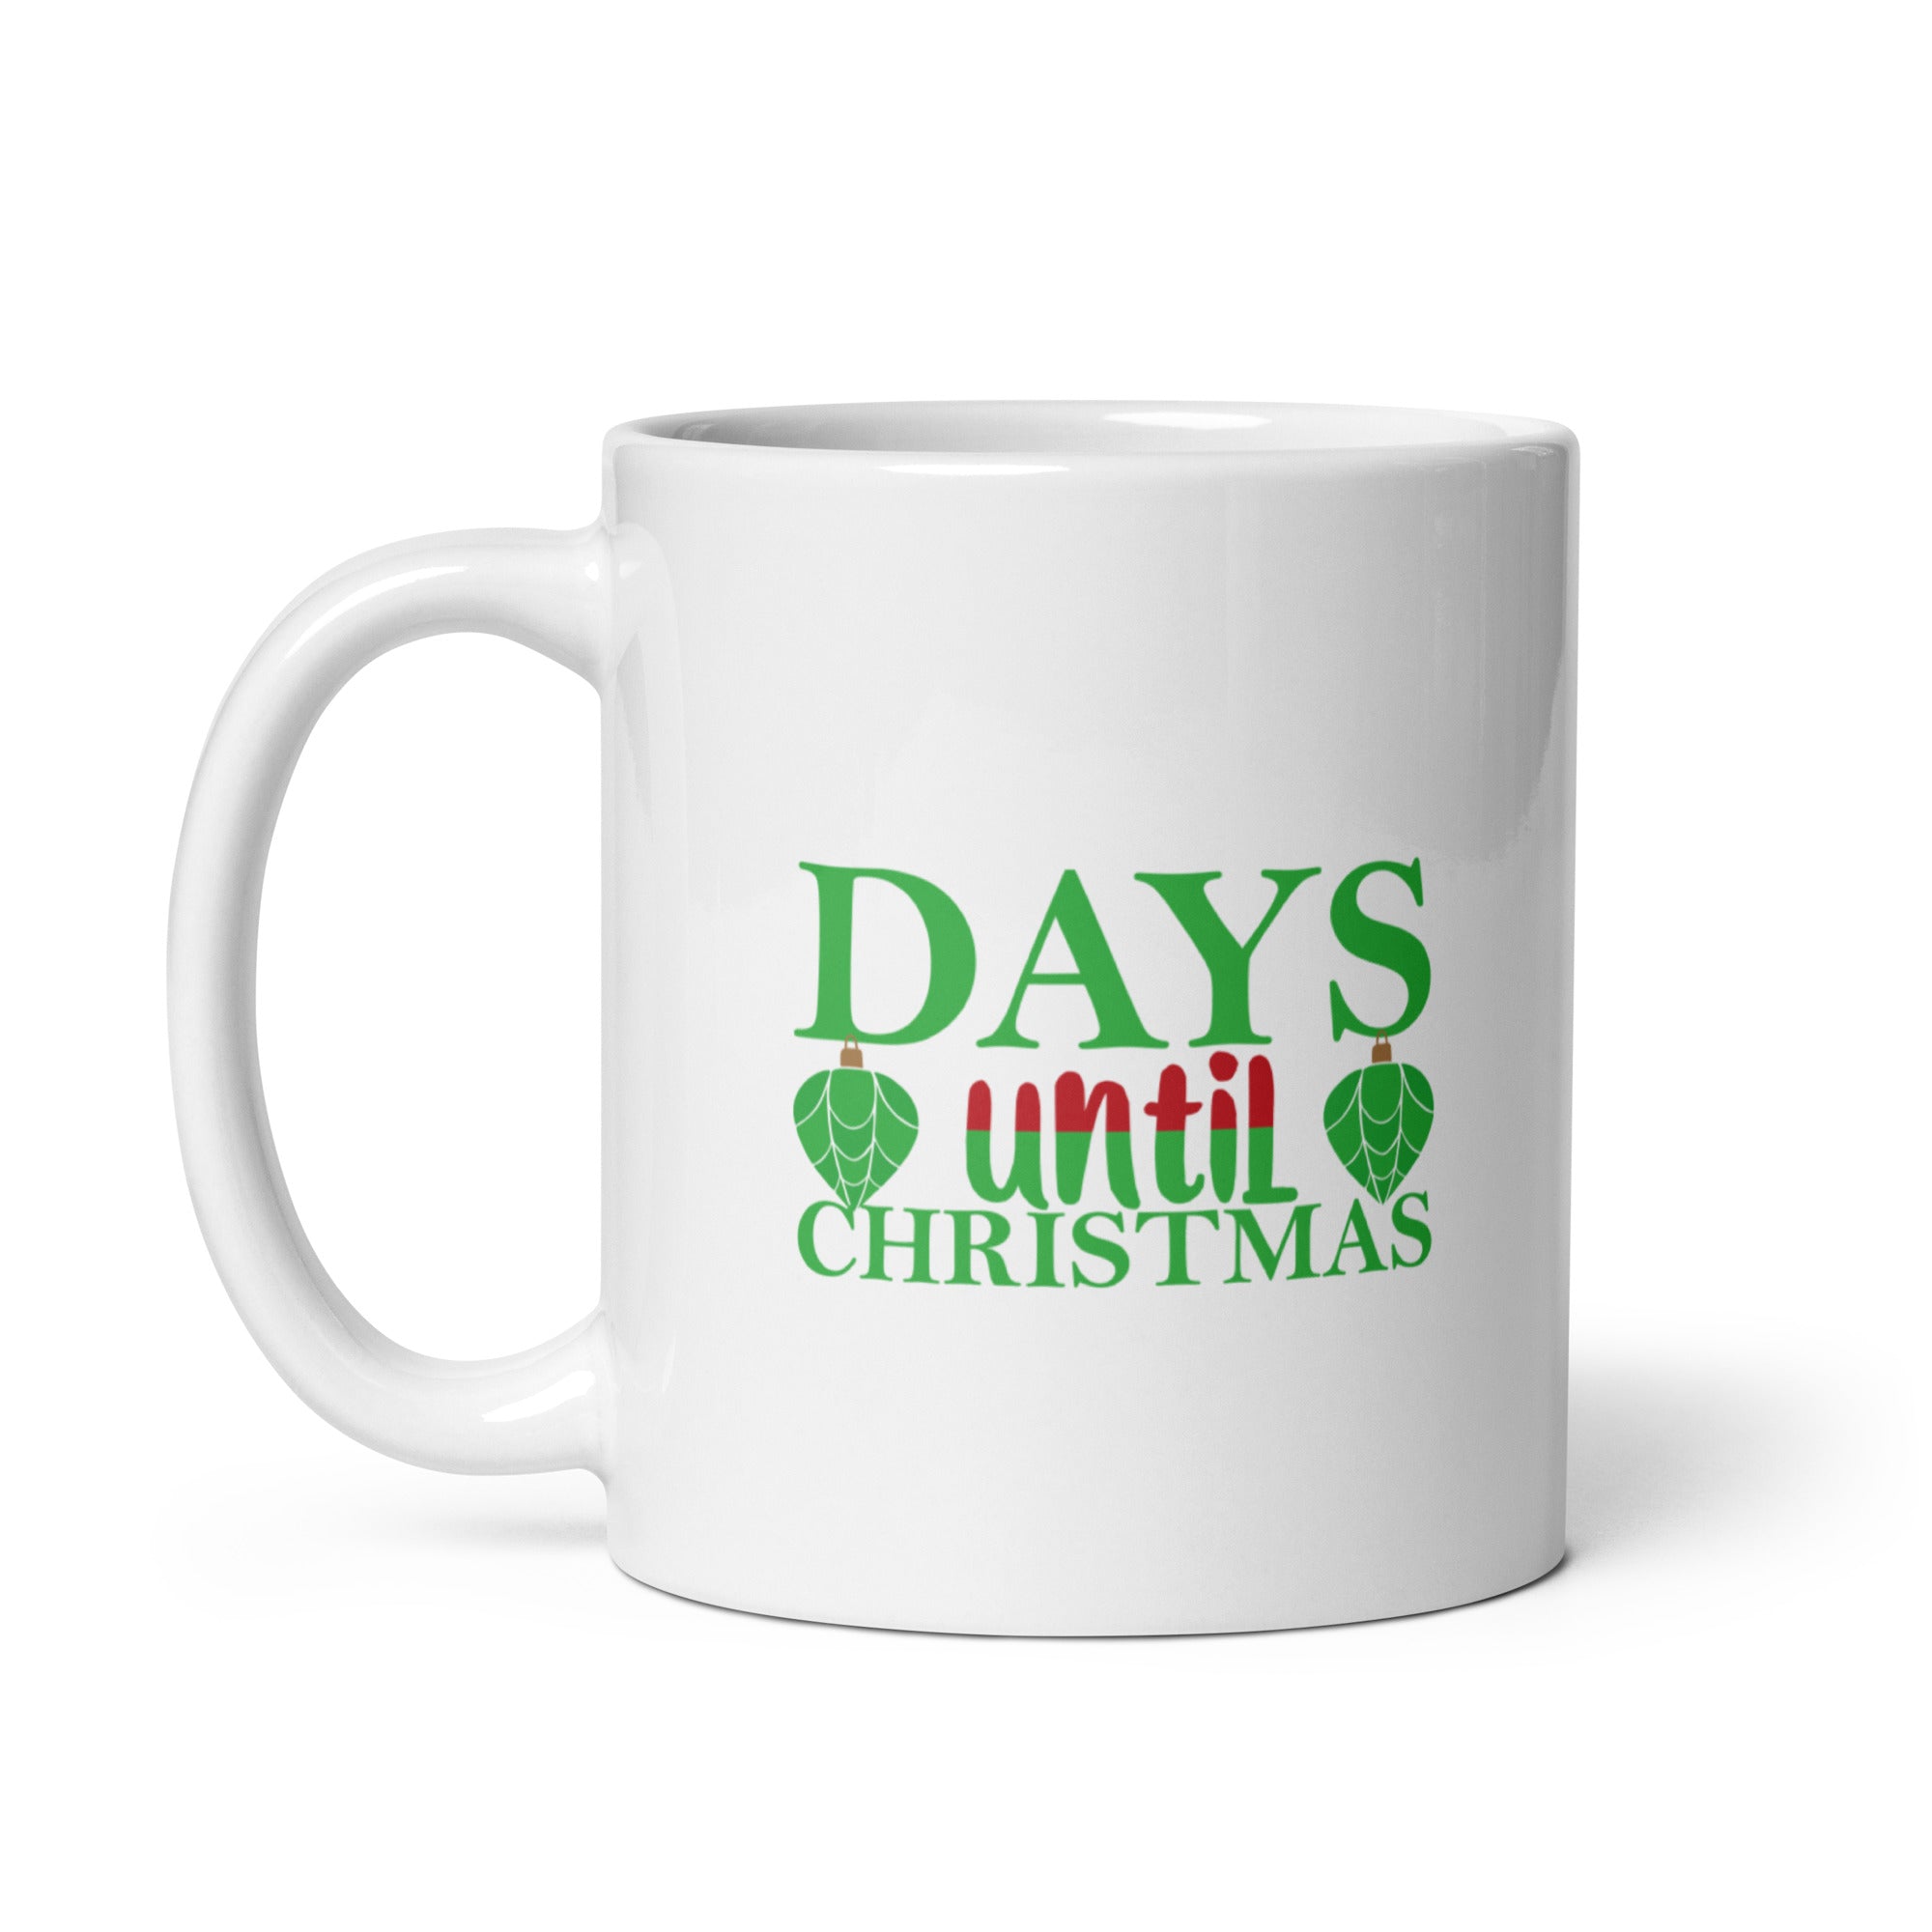 Days Until Christmas - White glossy mug